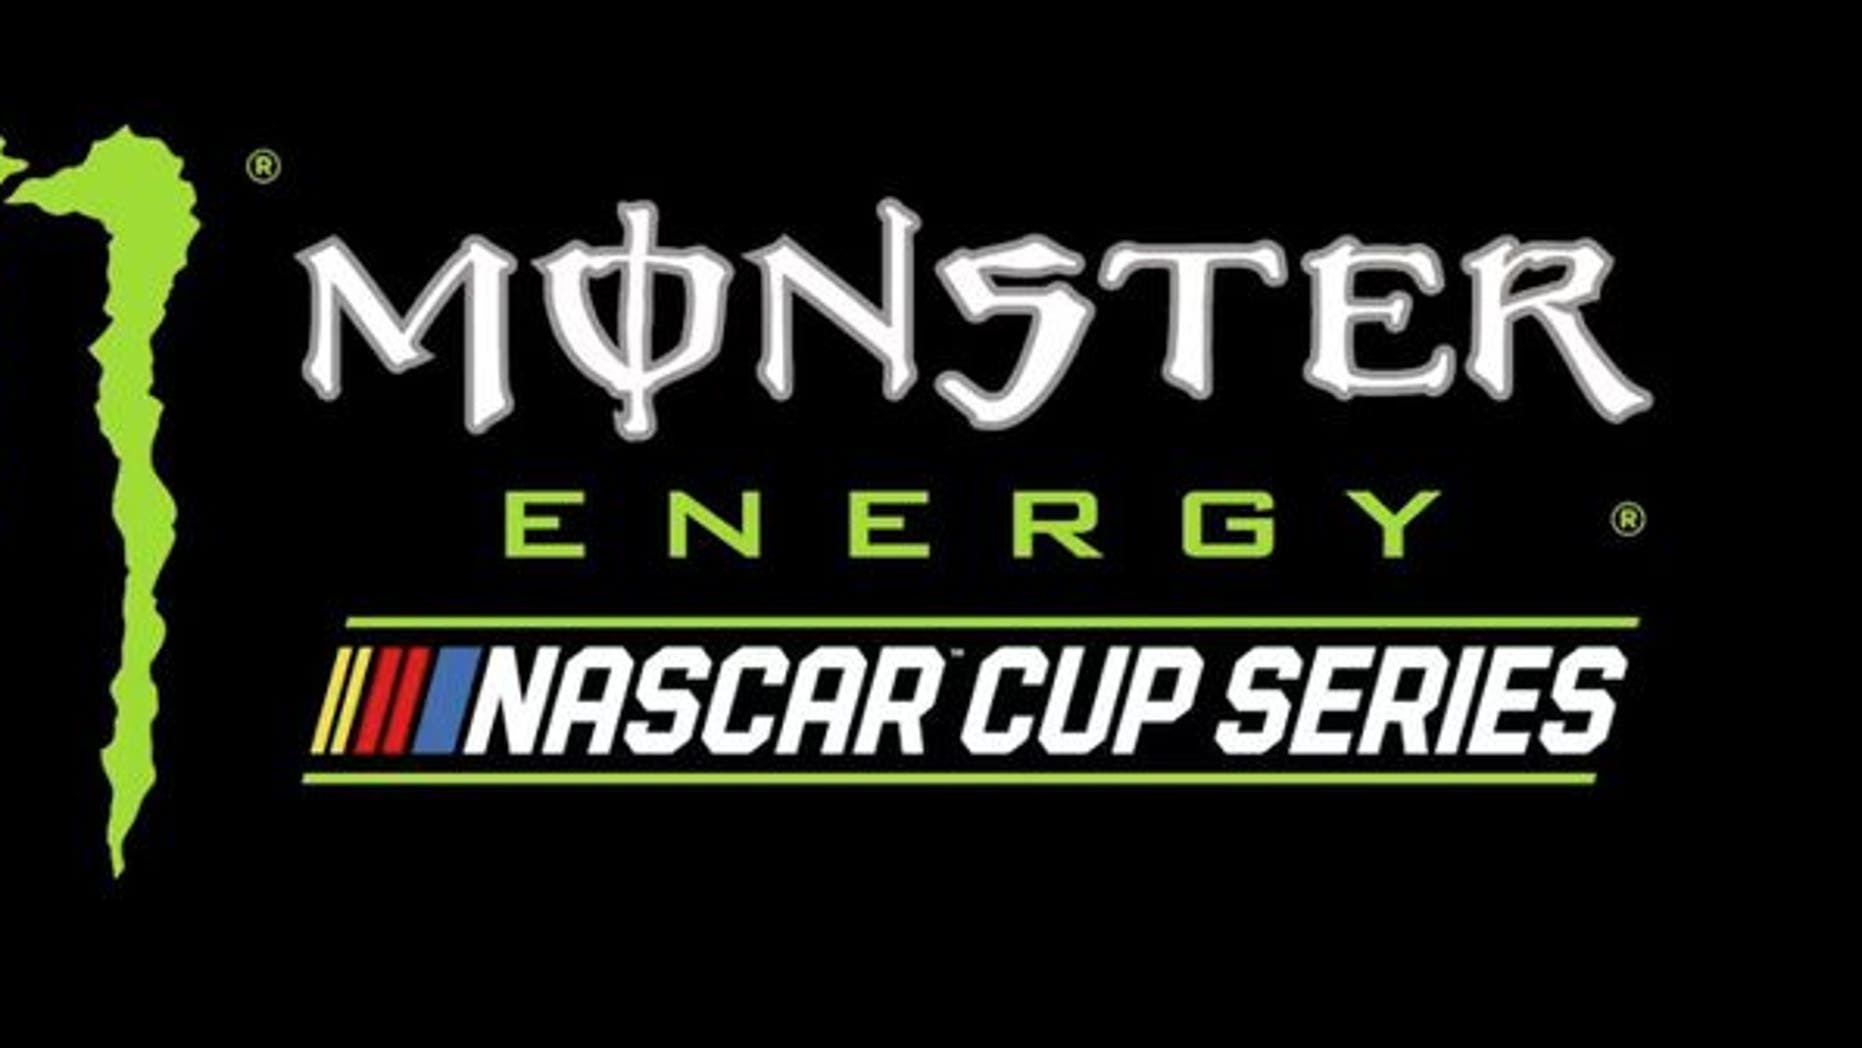 NASCAR to be Monster Energy Cup Series starting next season Fox News